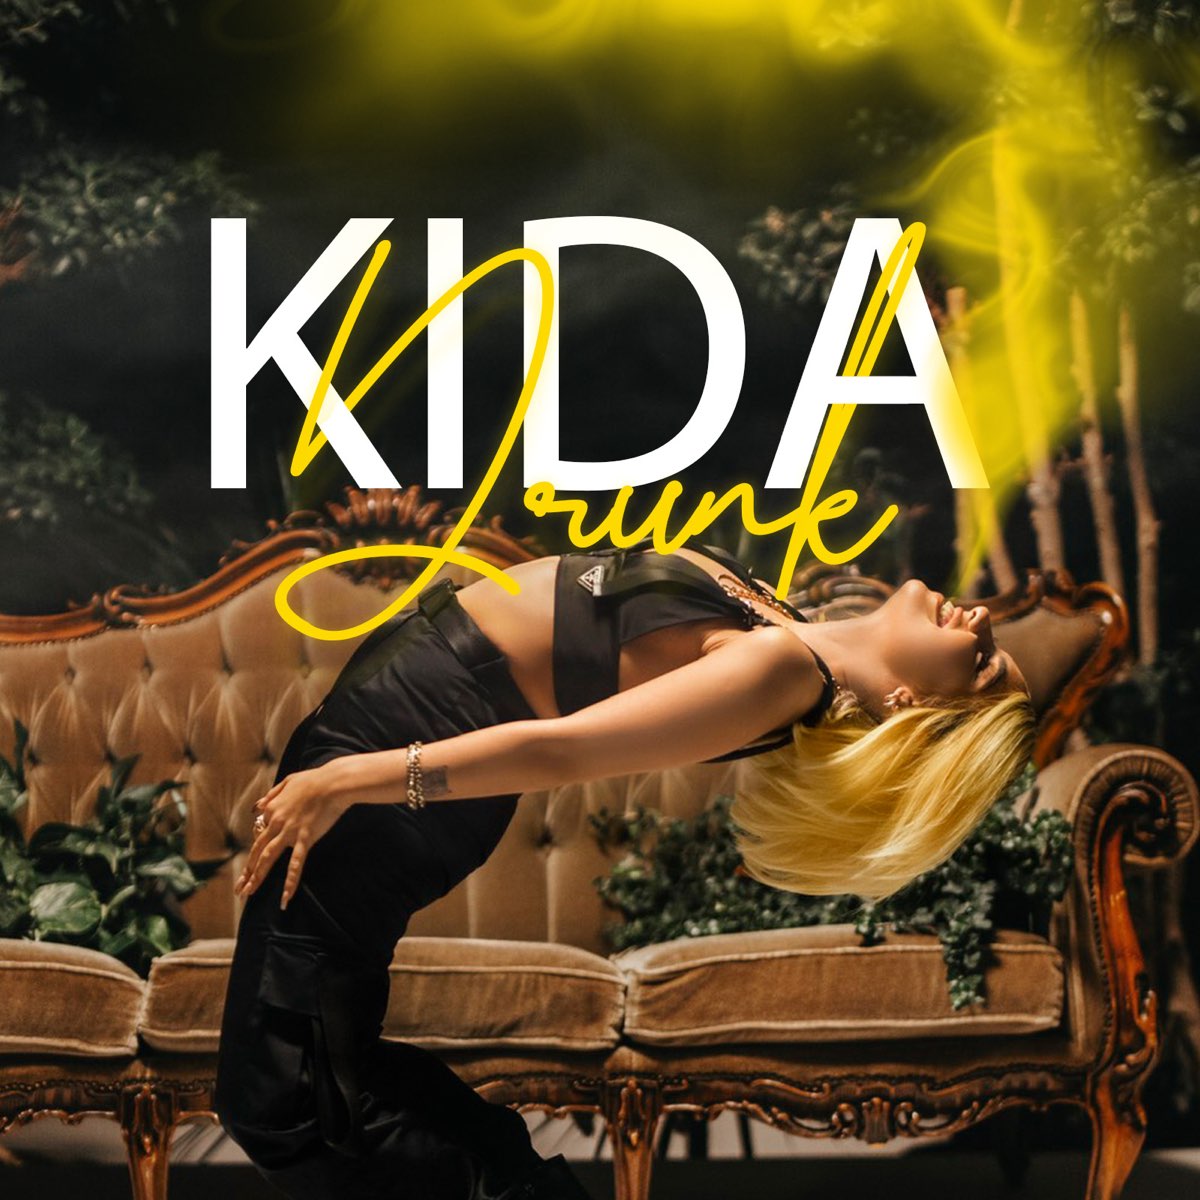 Kida Drunk cover artwork